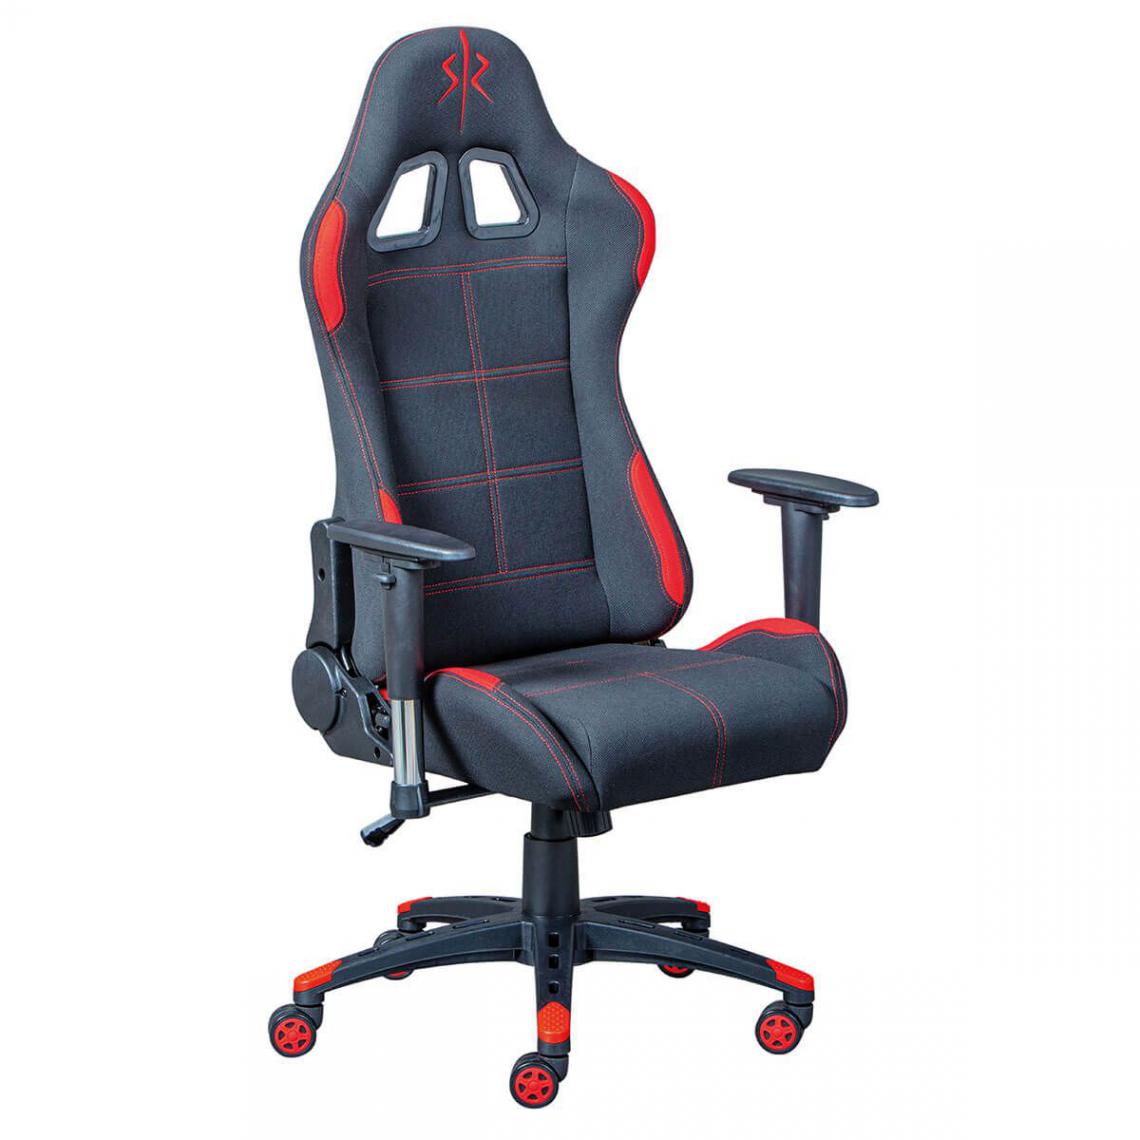 Altobuy - GAMER - Chaise Gaming Tissu Noir et Rouge - Chaise gamer